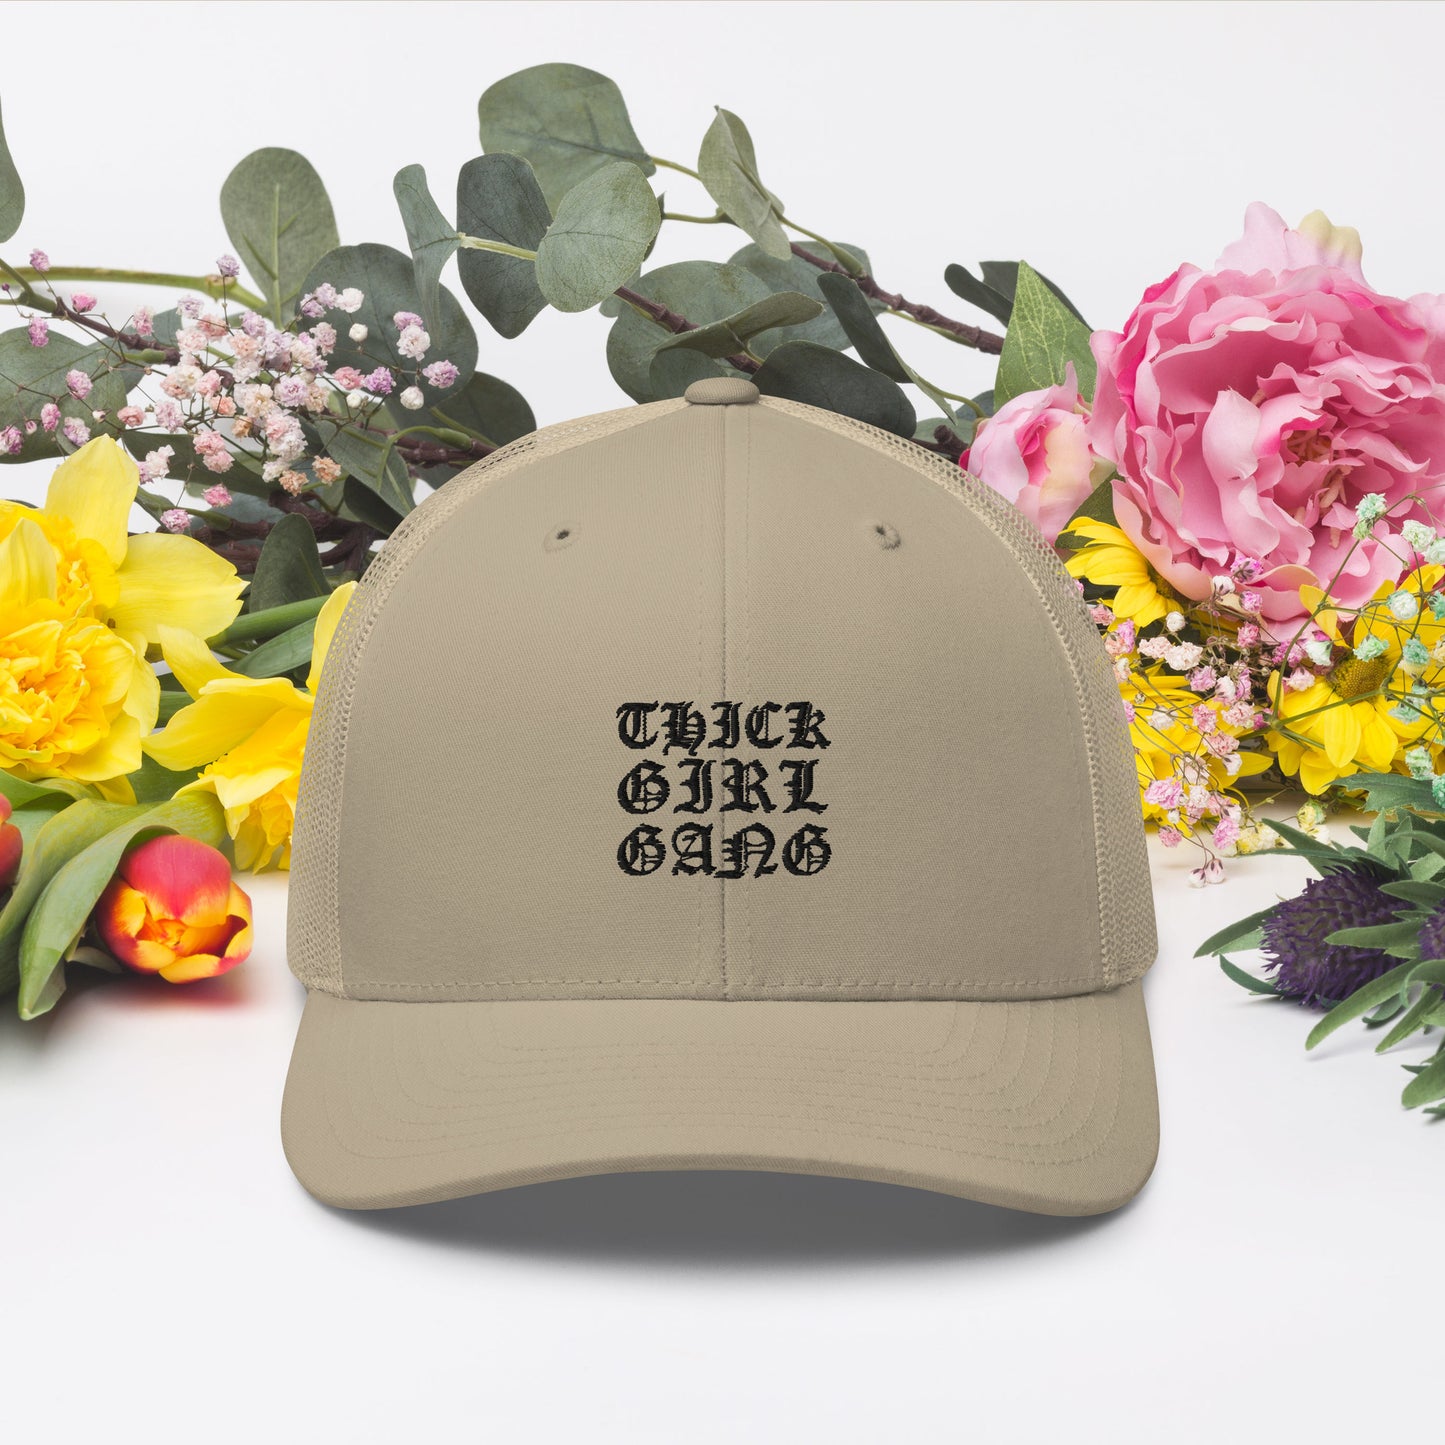 The THICK Girl Gang Cali Trucker Cap